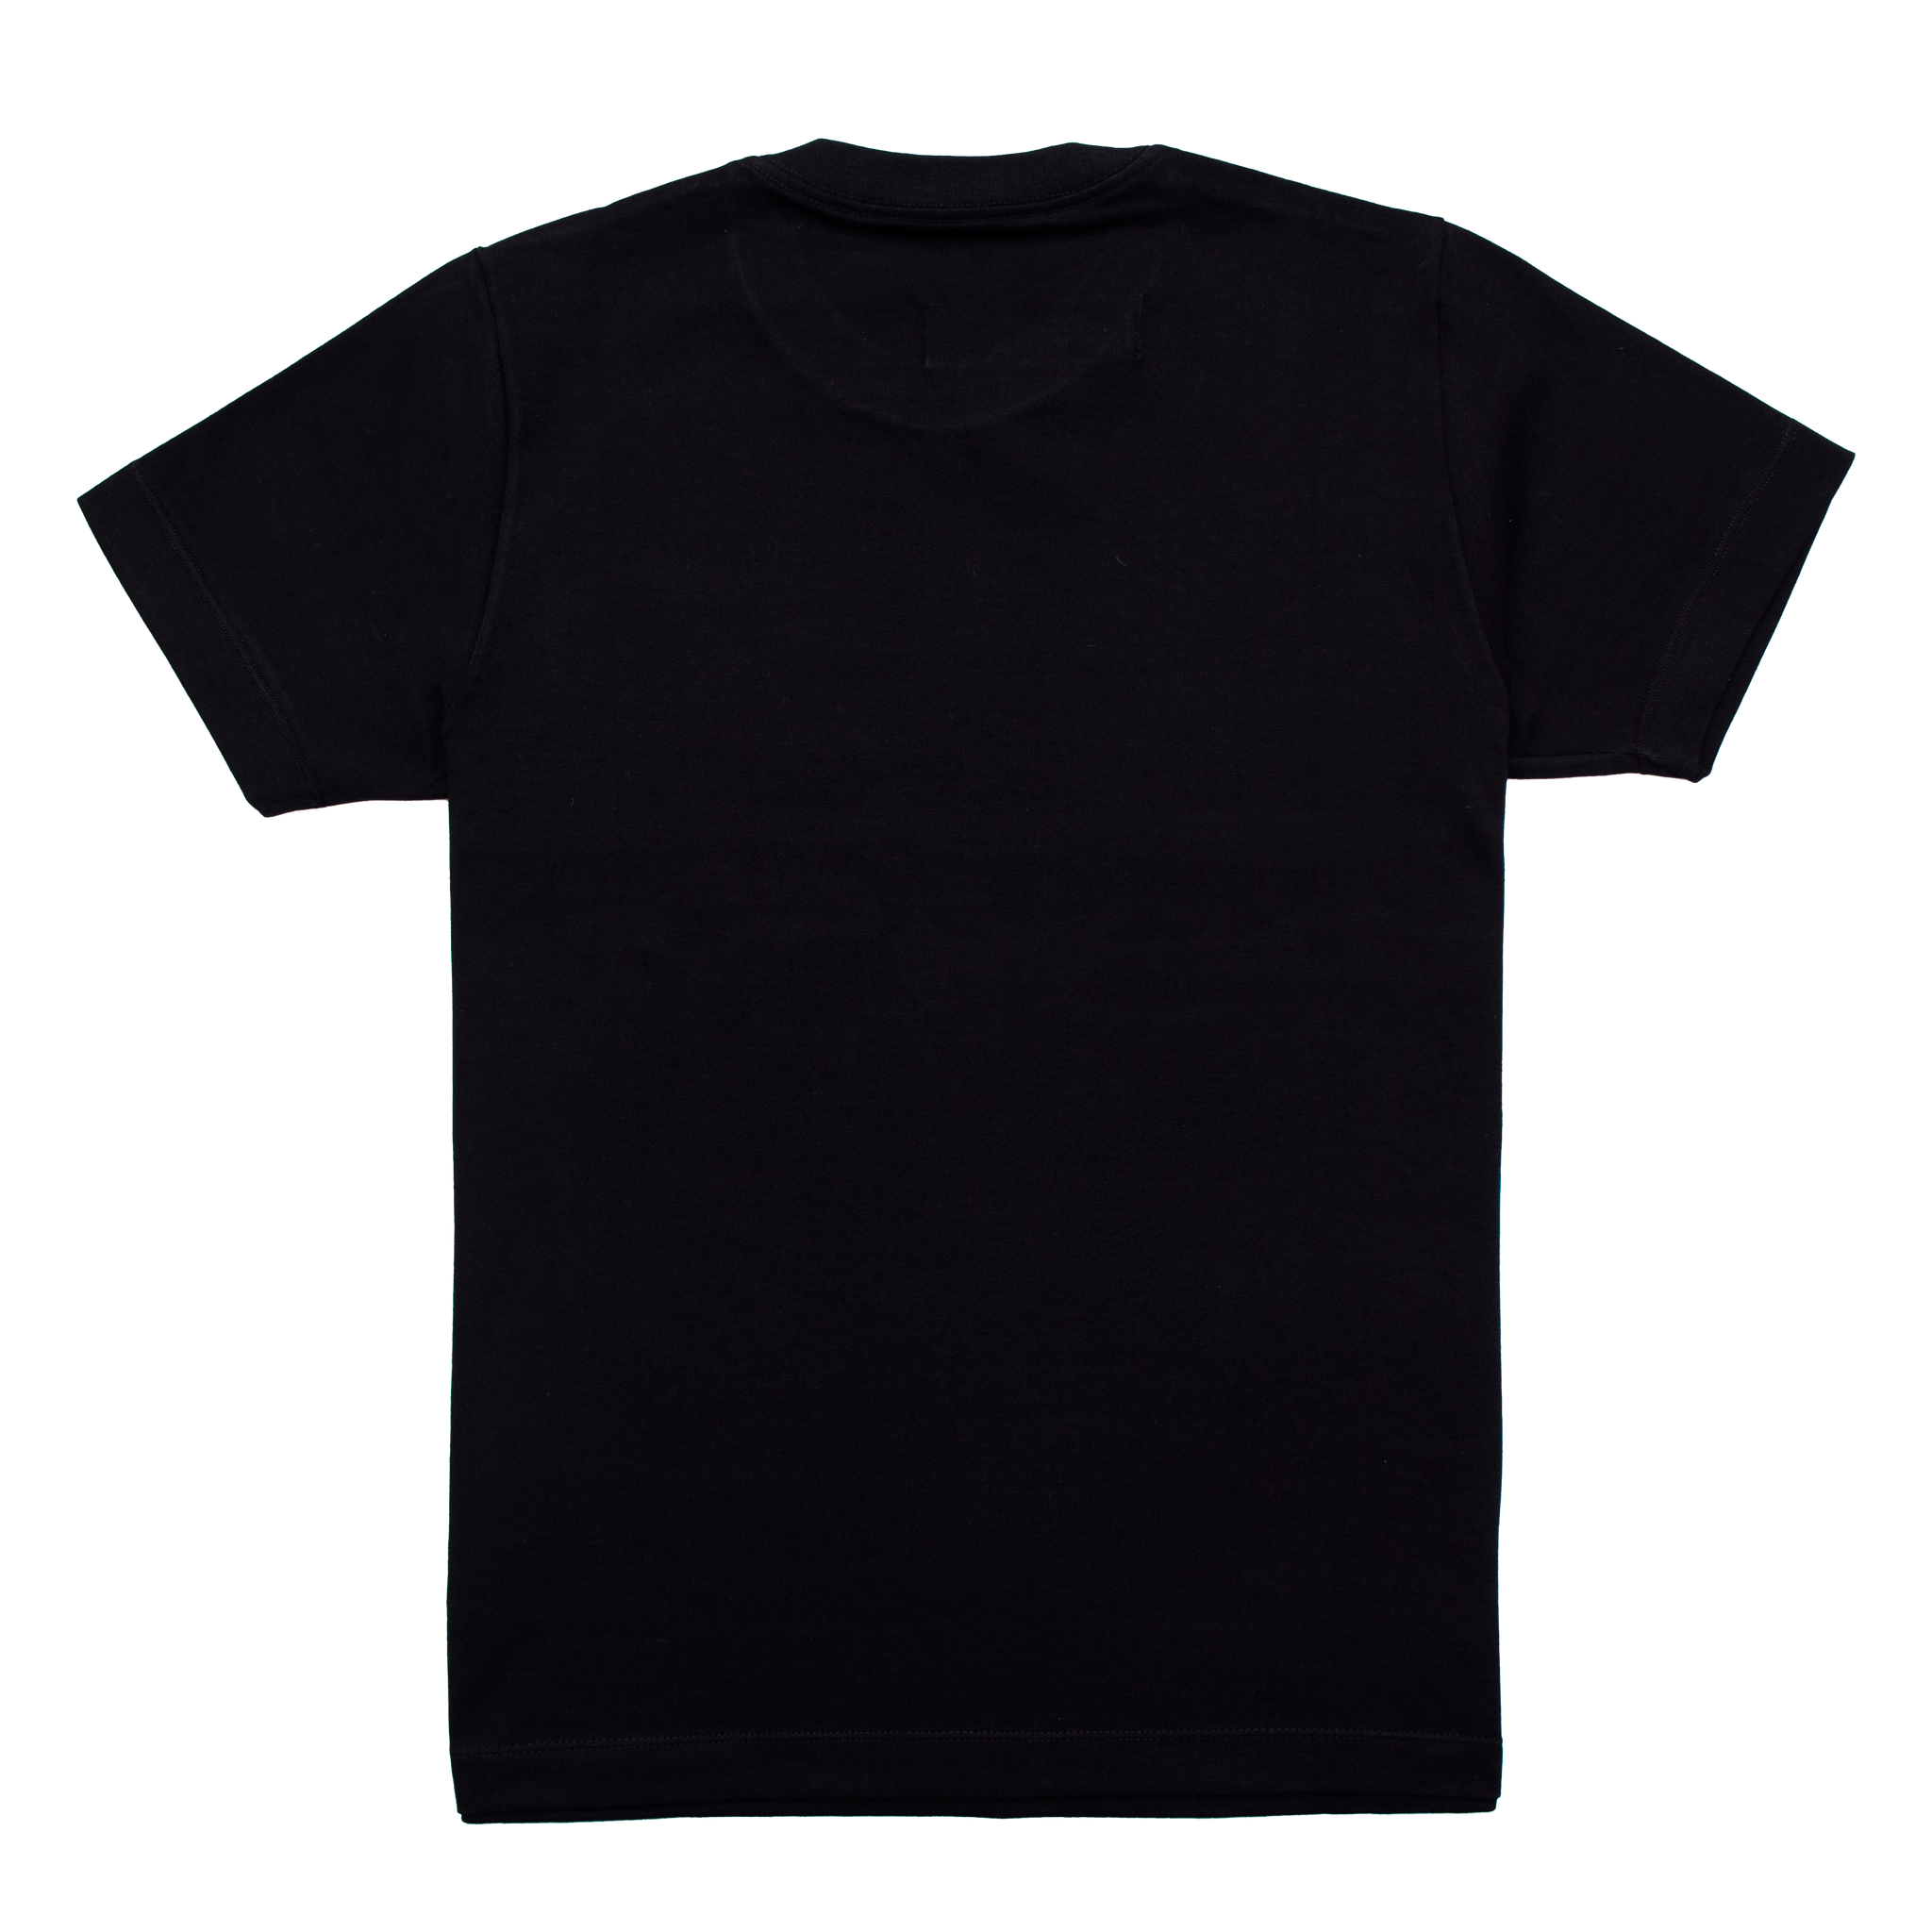 BECK'S x WORKING TITLE Camiseta Autopilot - Black